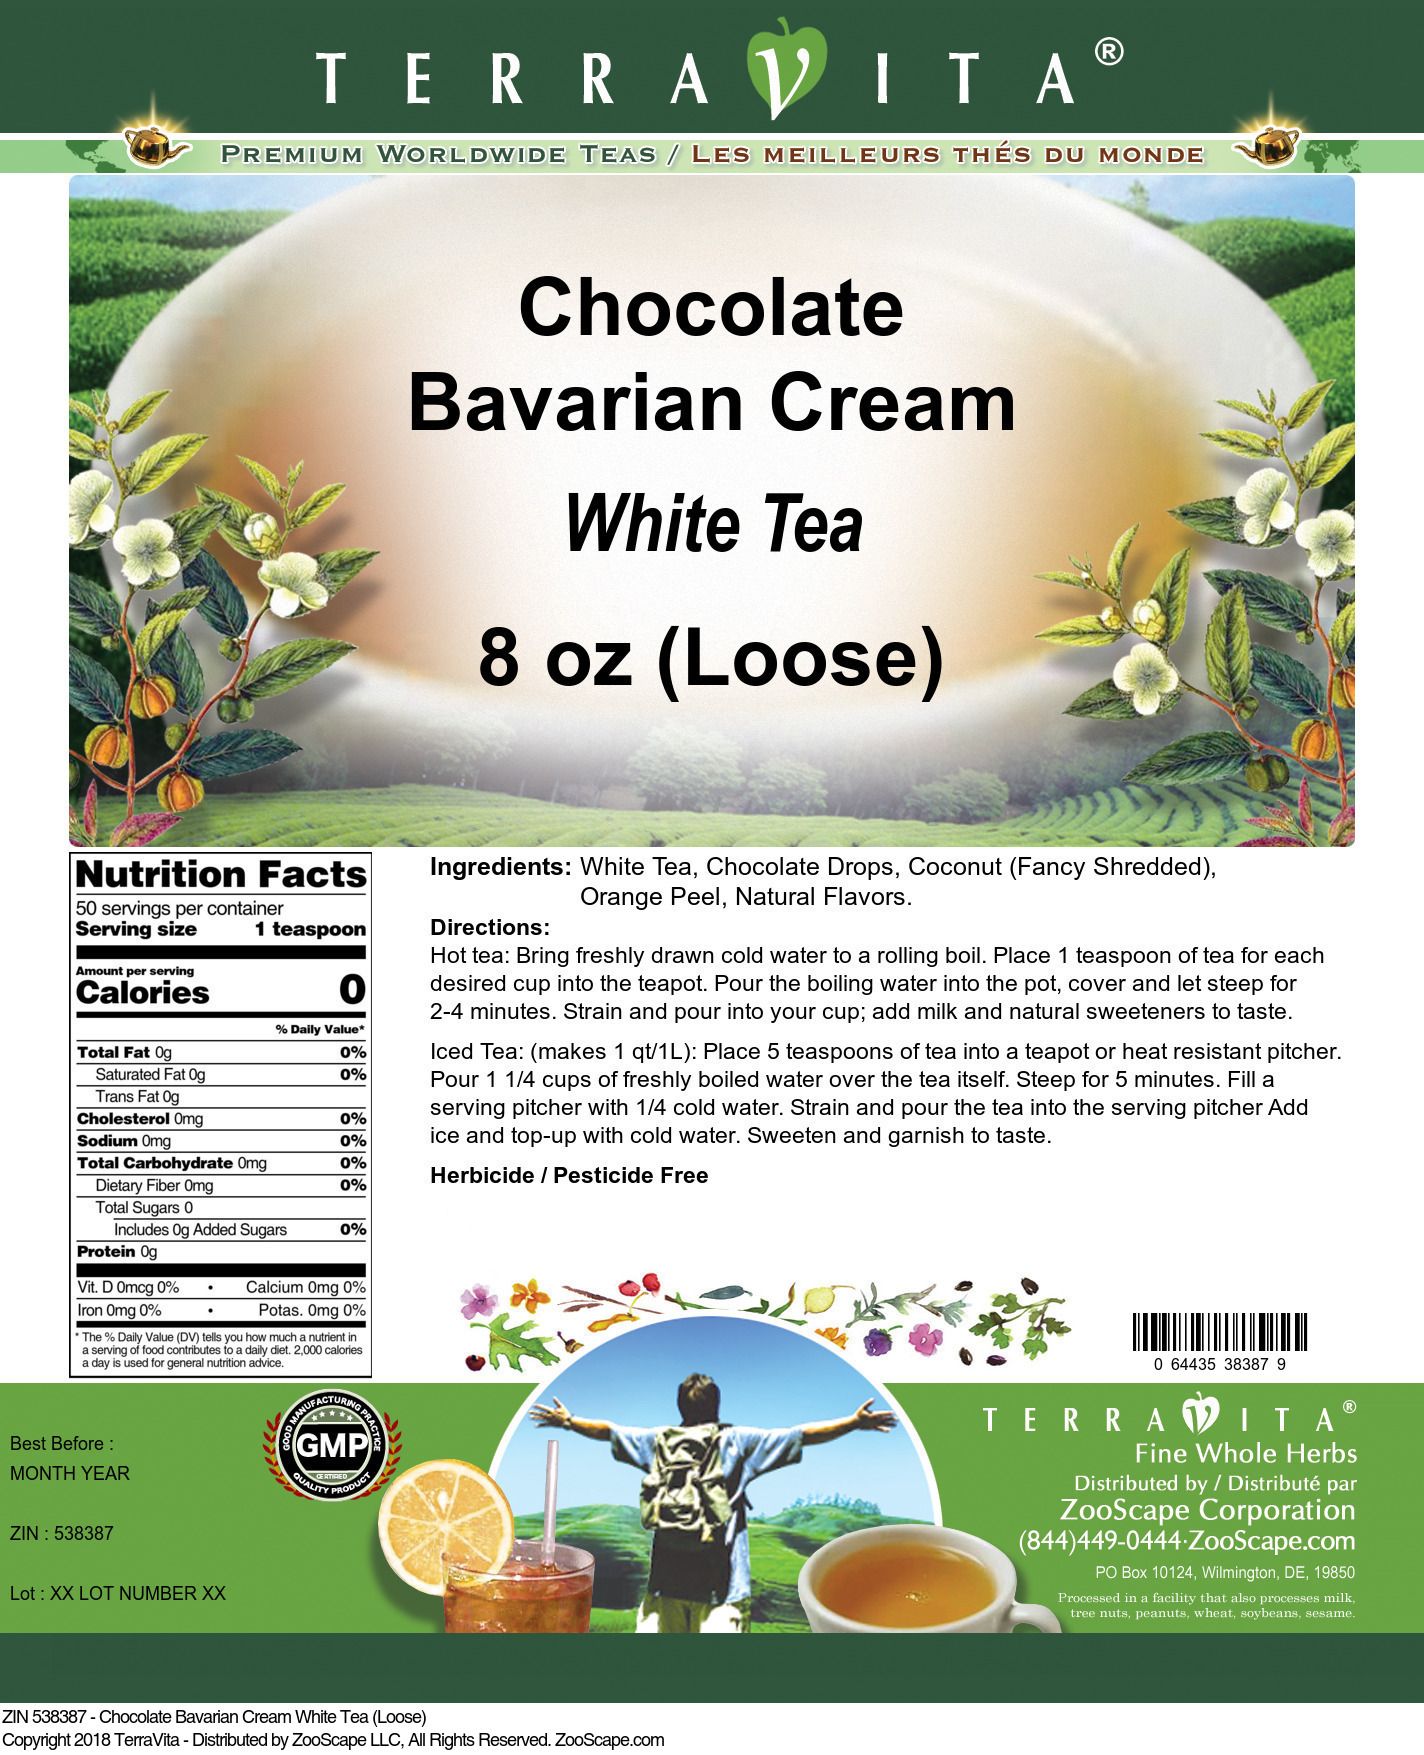 Chocolate Bavarian Cream White Tea (Loose) - Label